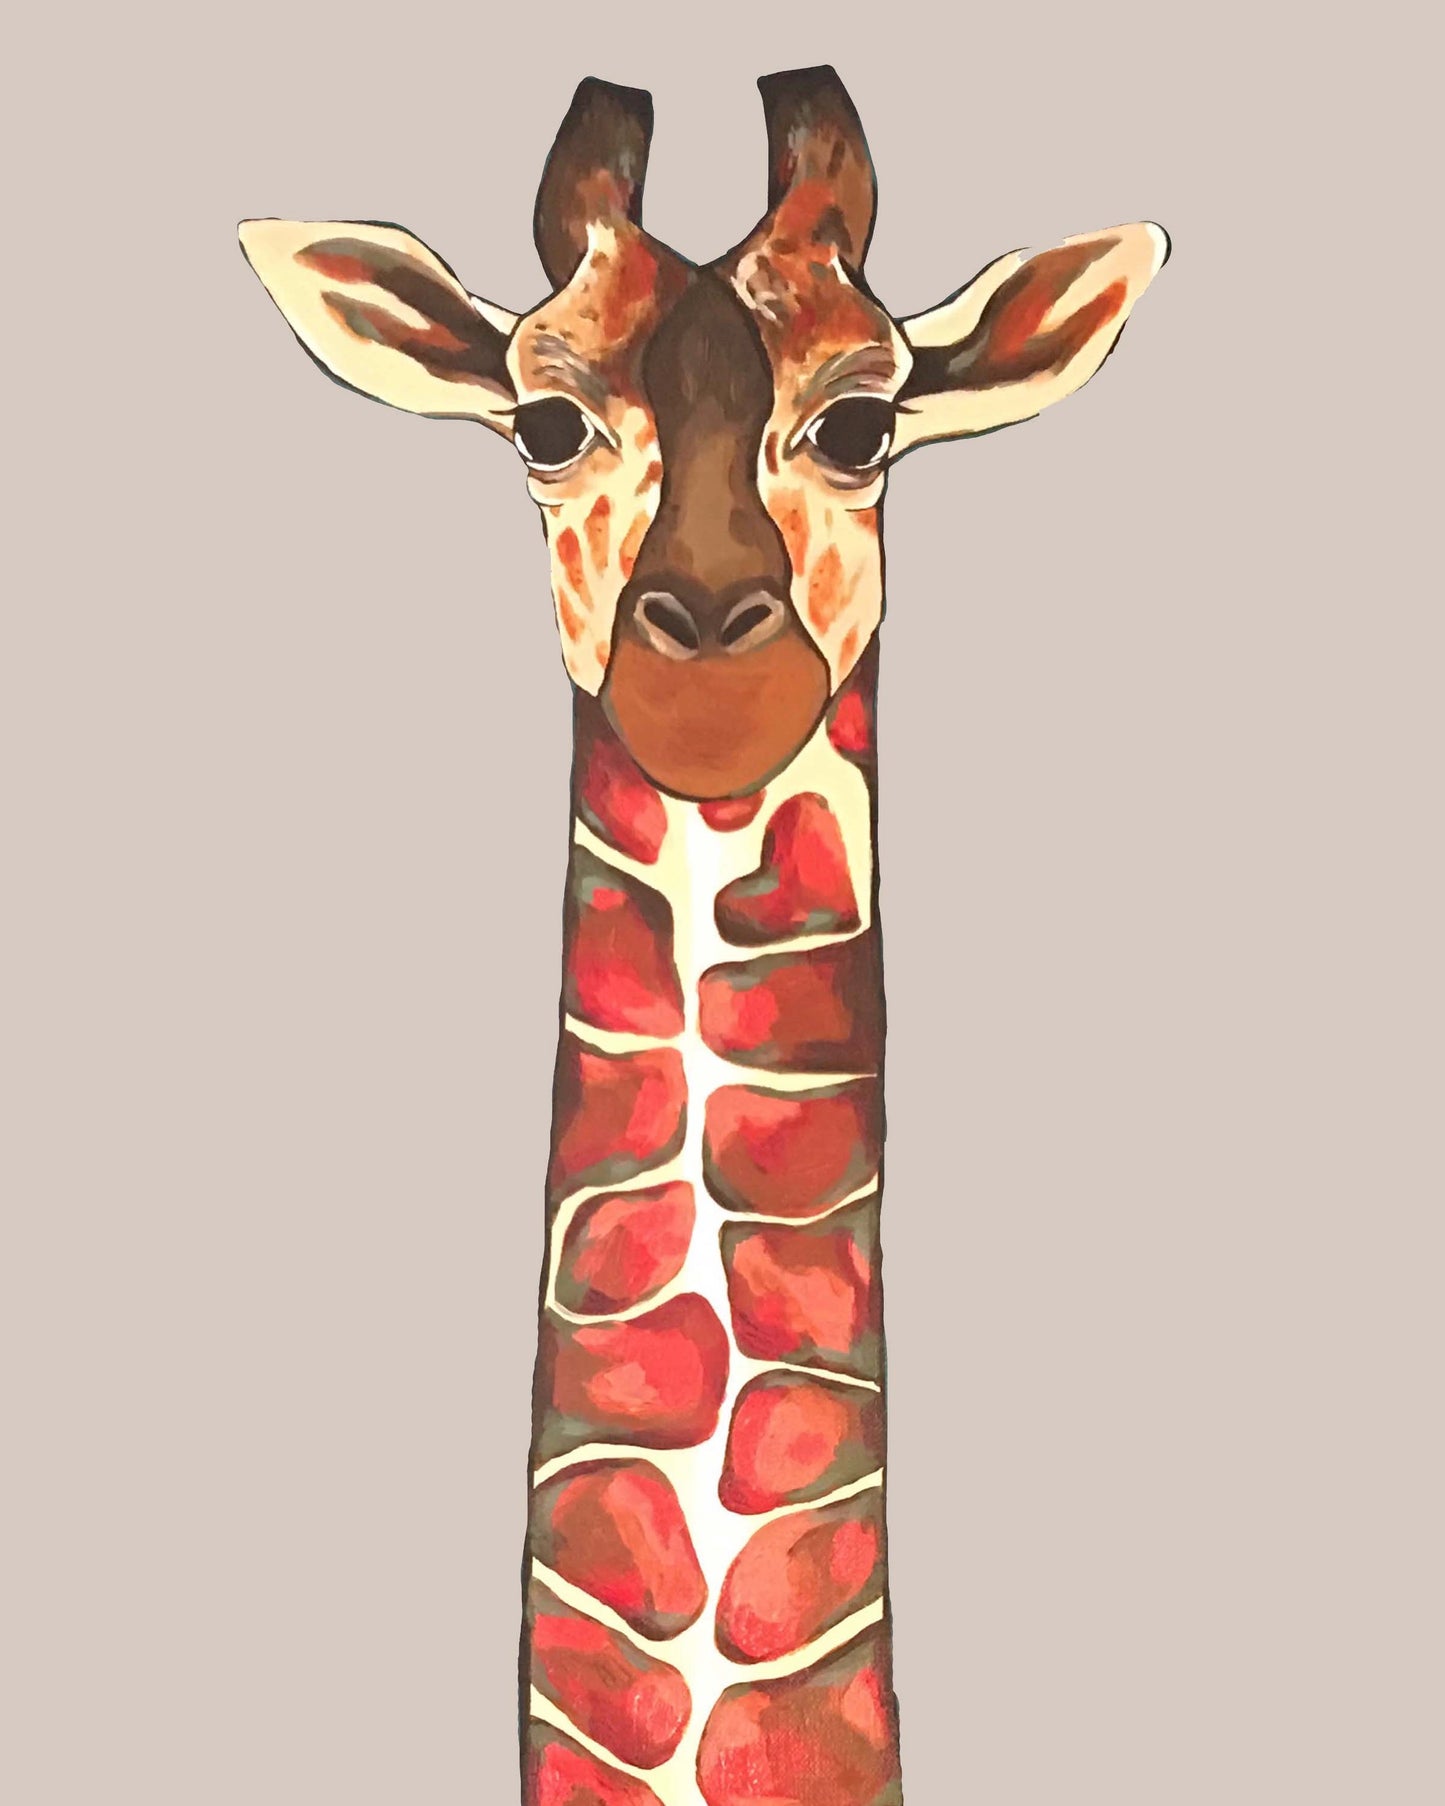 Zuberi the Giraffe